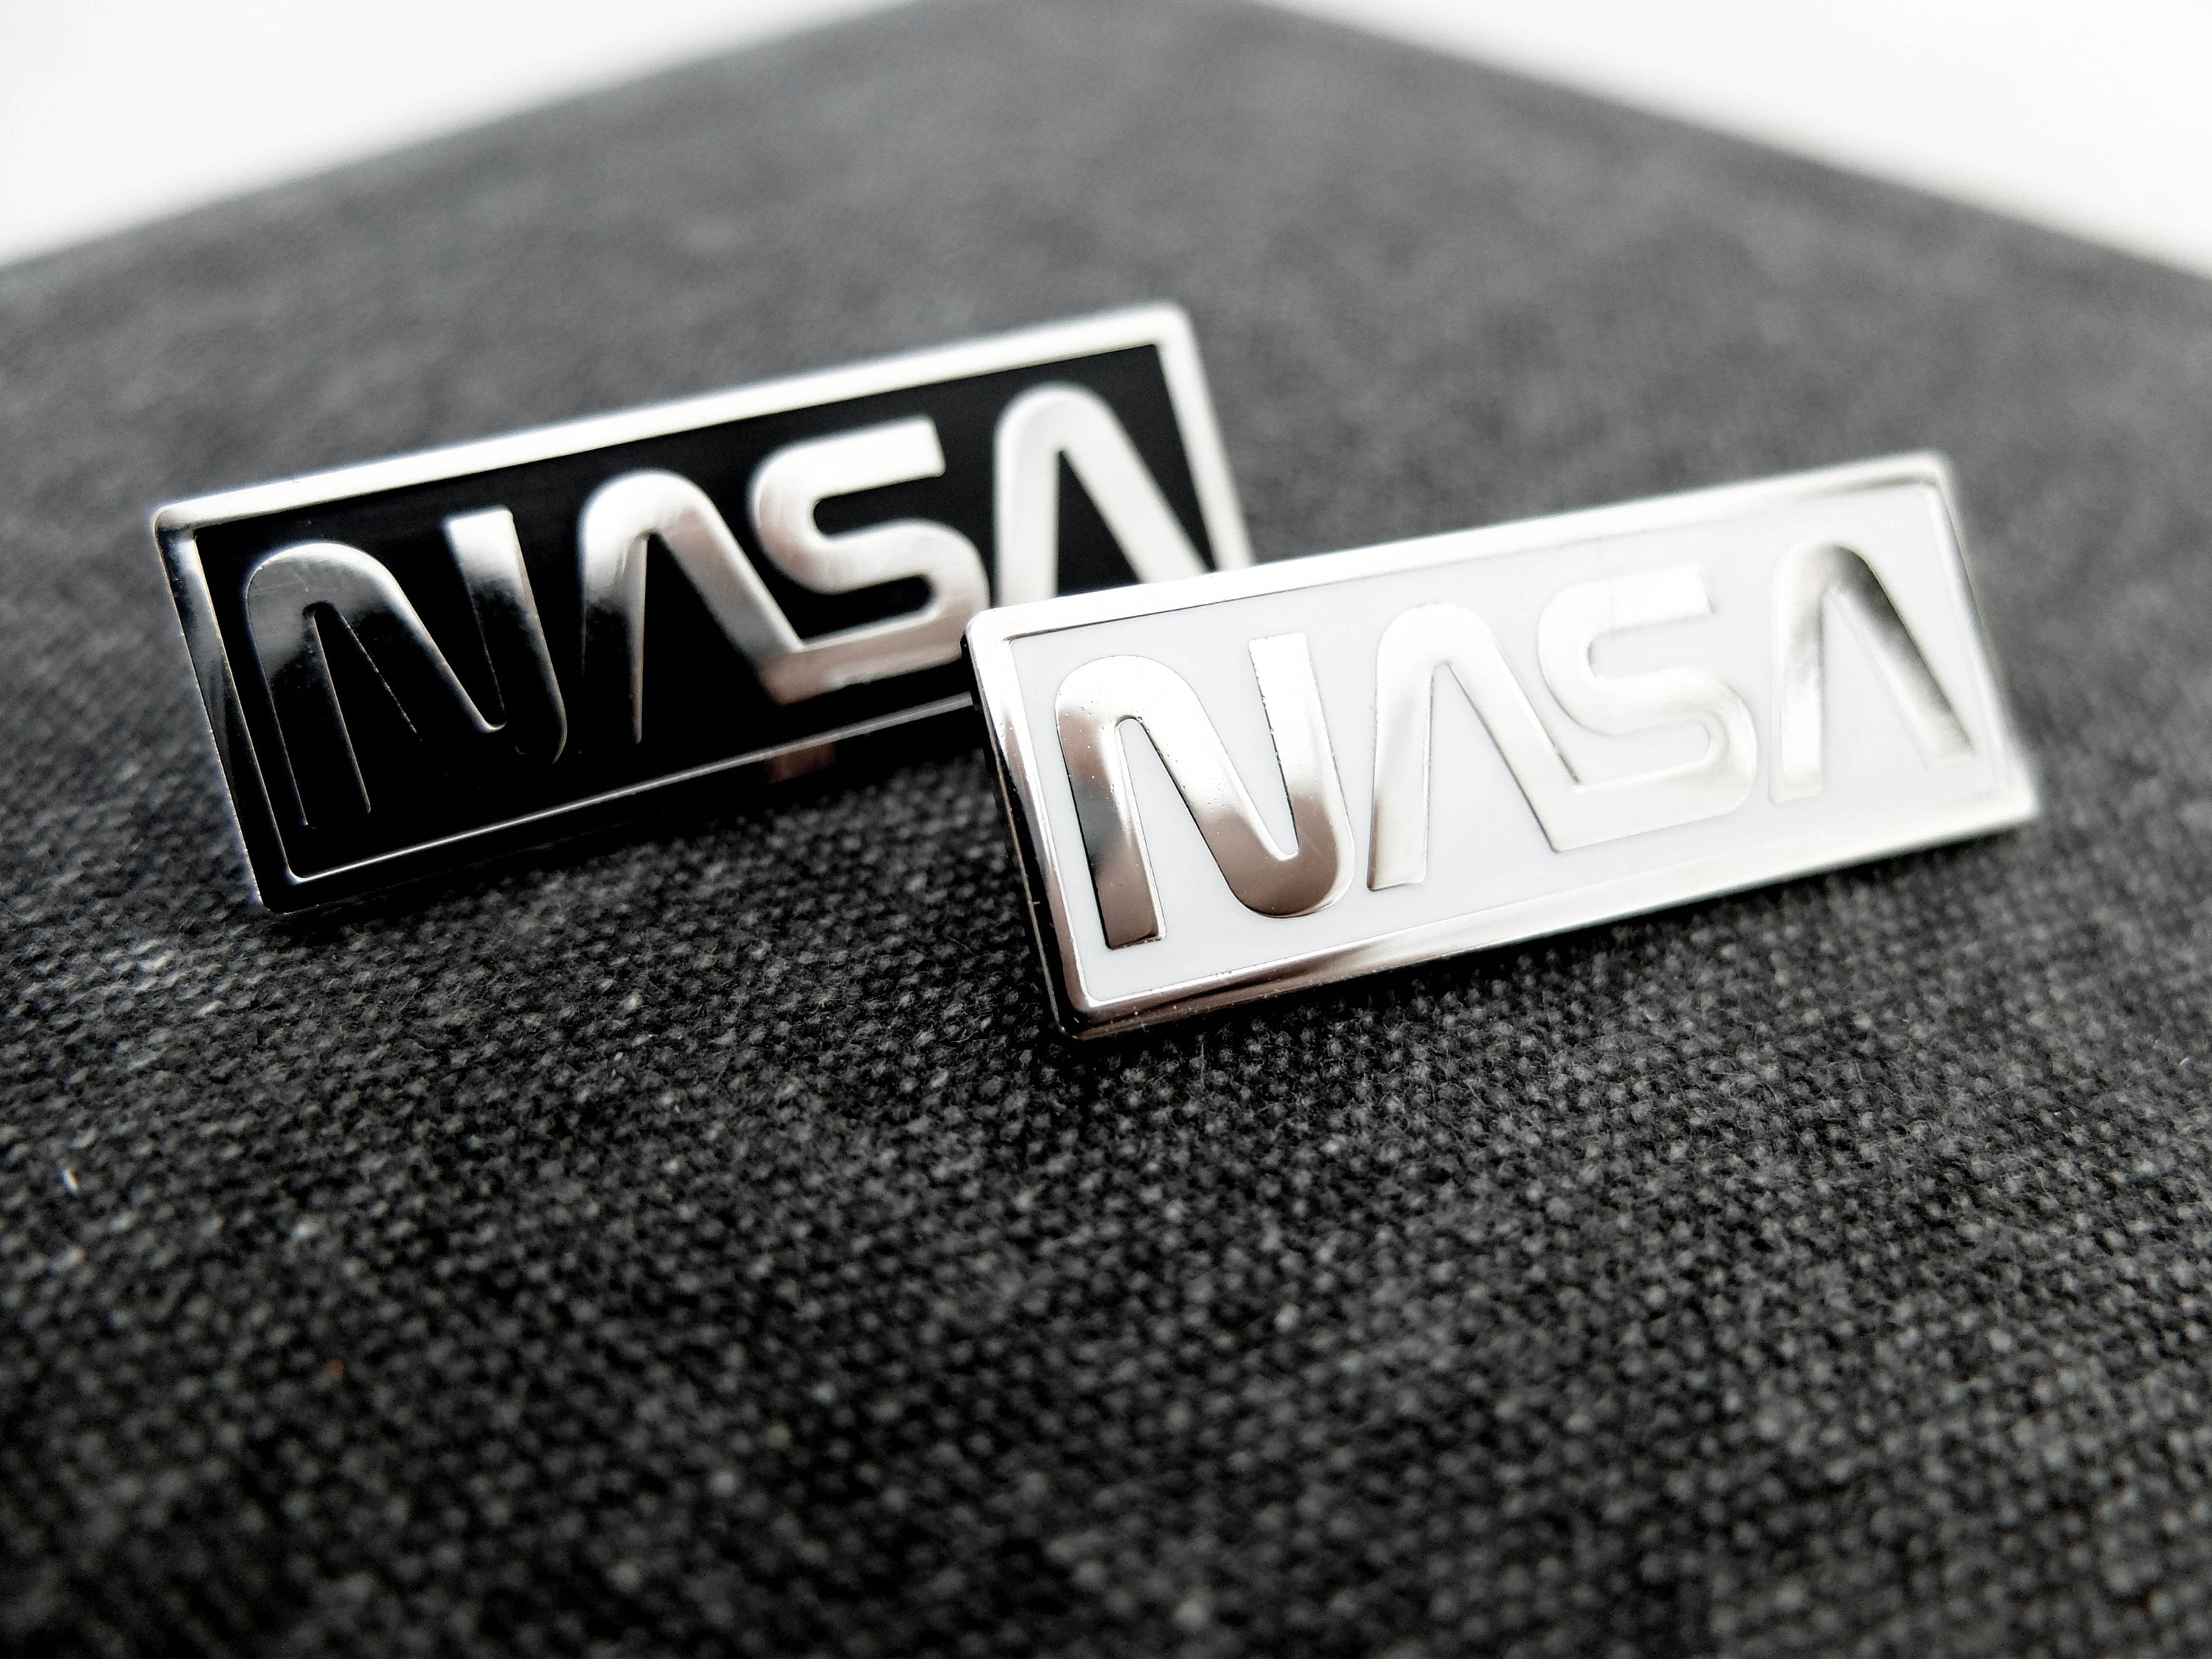 Retrofuturistic NASA Enamel Pin - Retro Space Lapel Pin / Brooch - Astronaut / Astronomy Gift